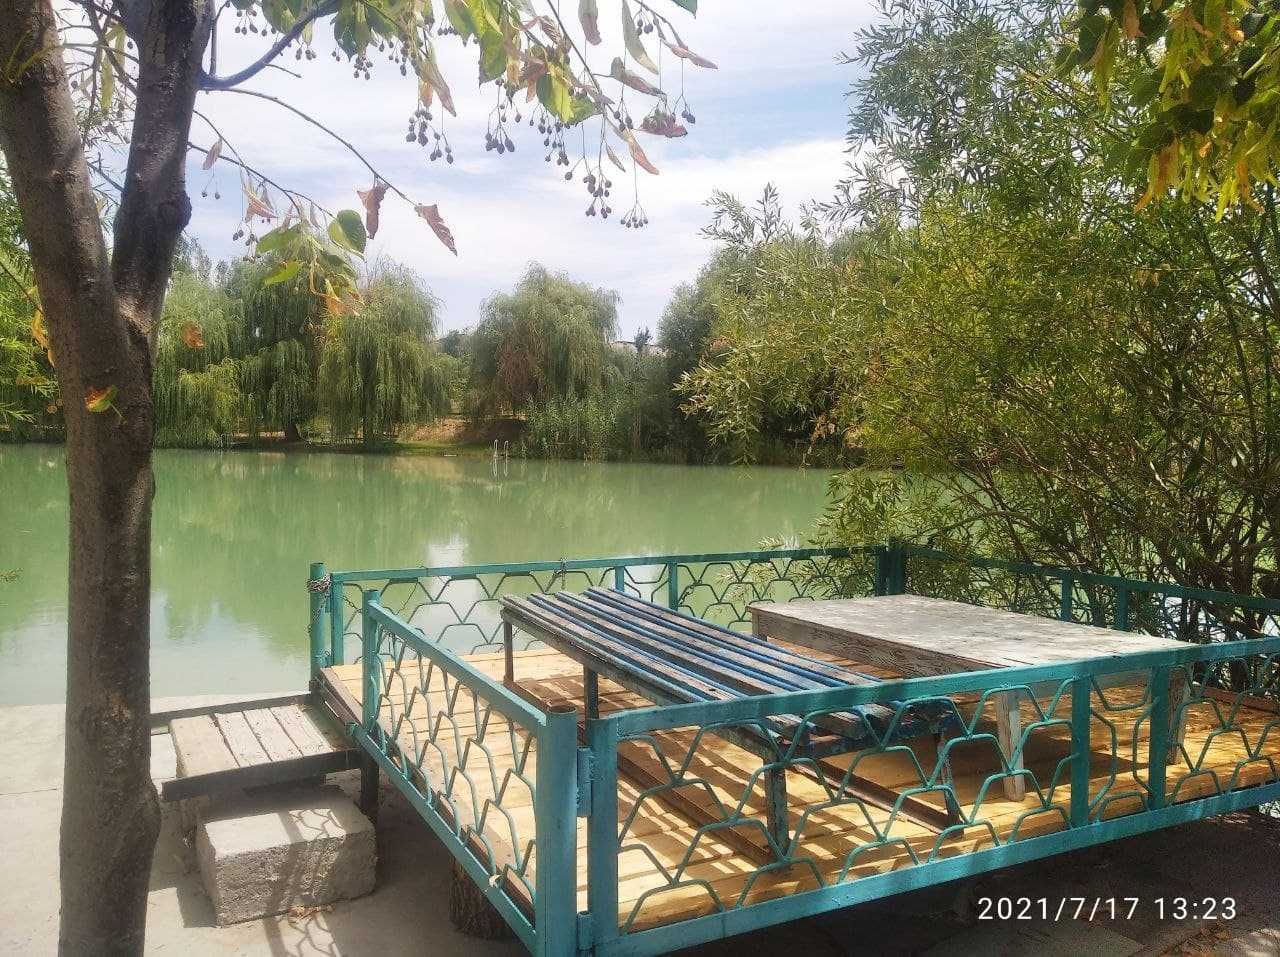 Сдам в аренду котедж в  пойме реки Бозсу  в пригороде Ташкента